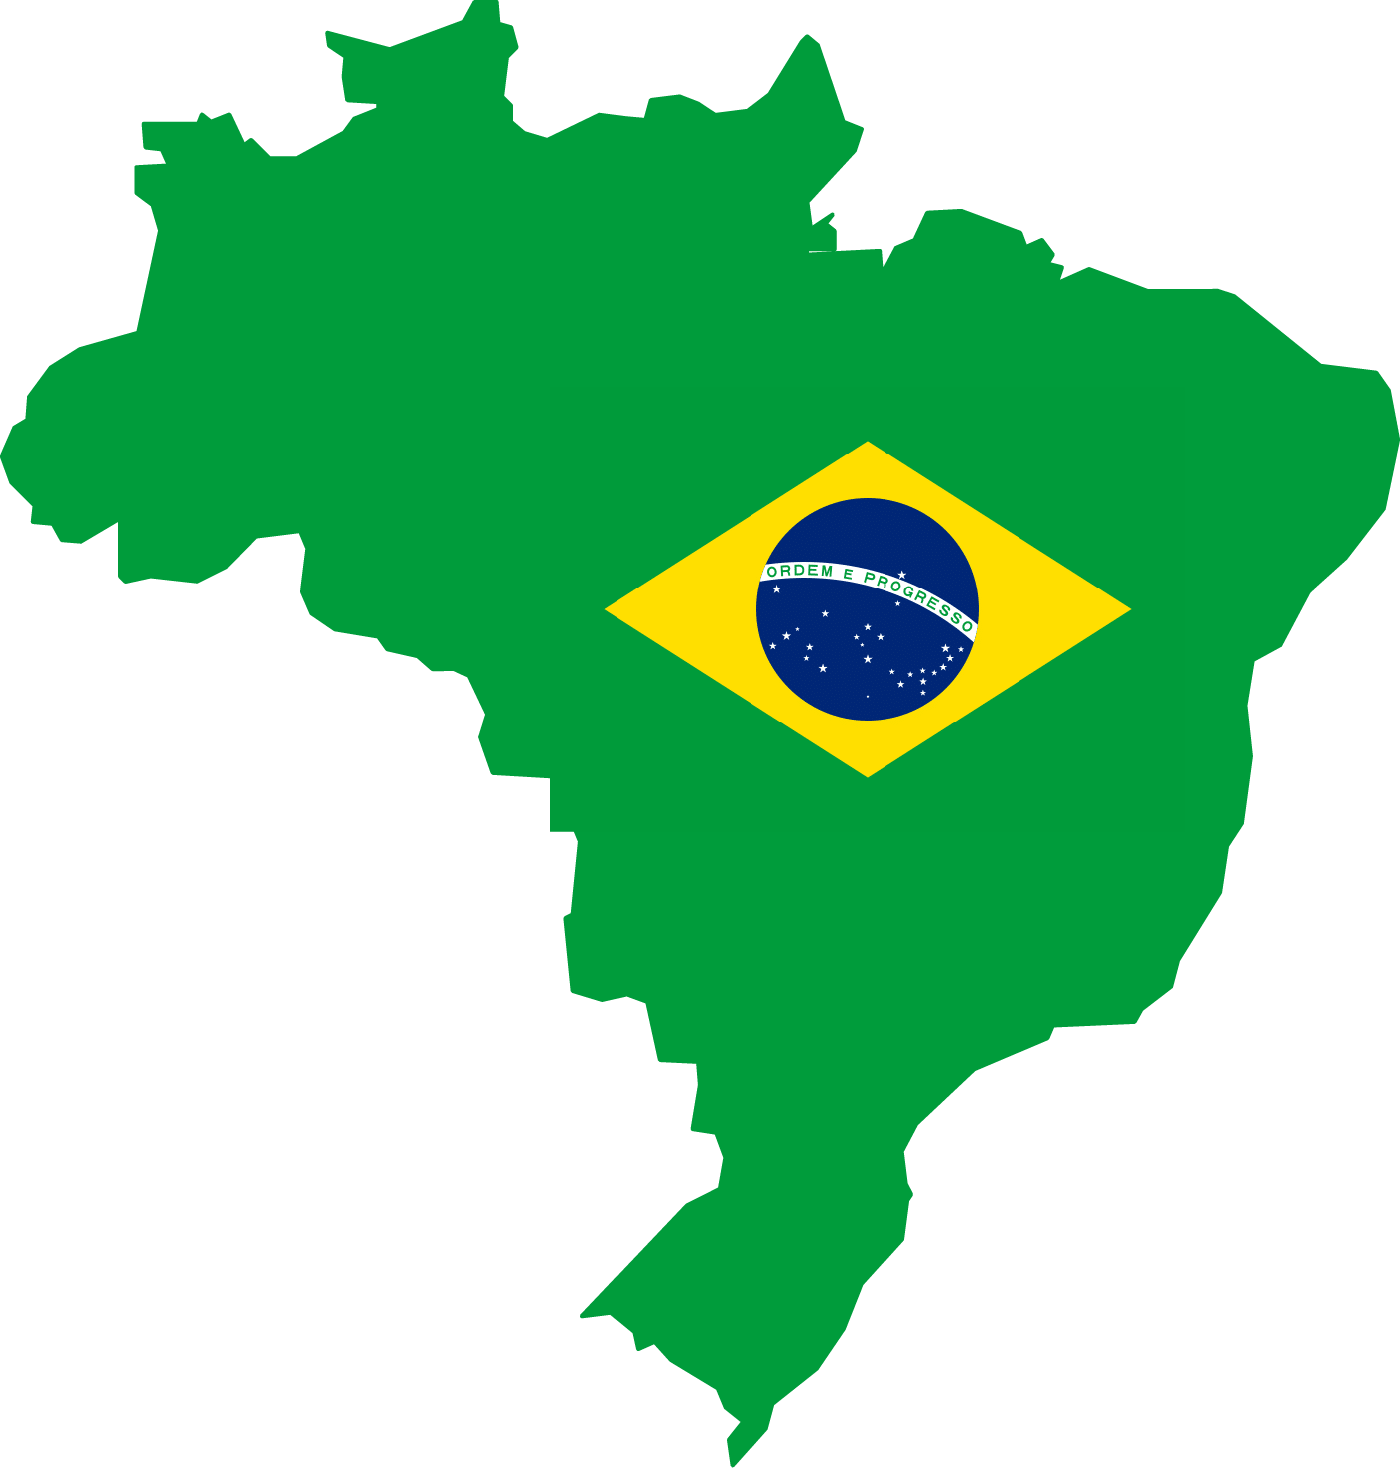 CDN in Brazil